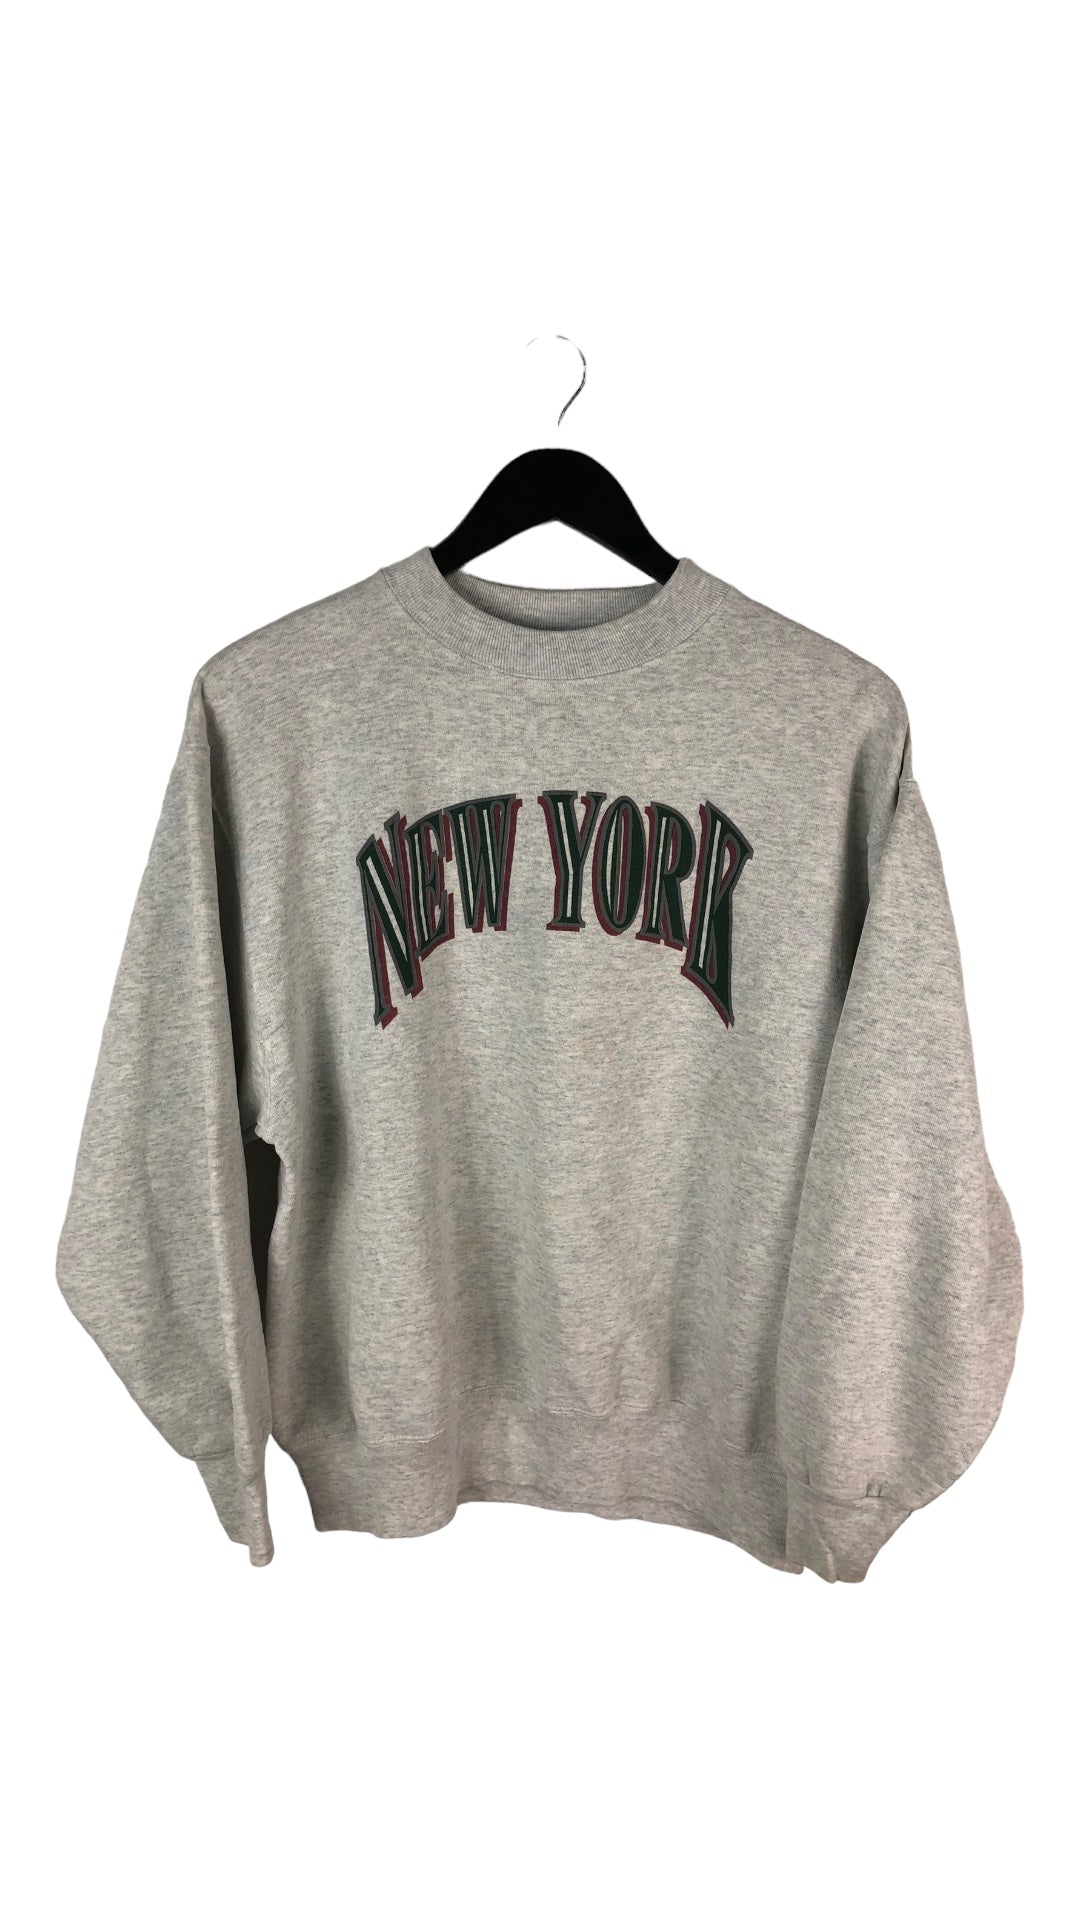 VTG New York Crewneck Sweater Sz L